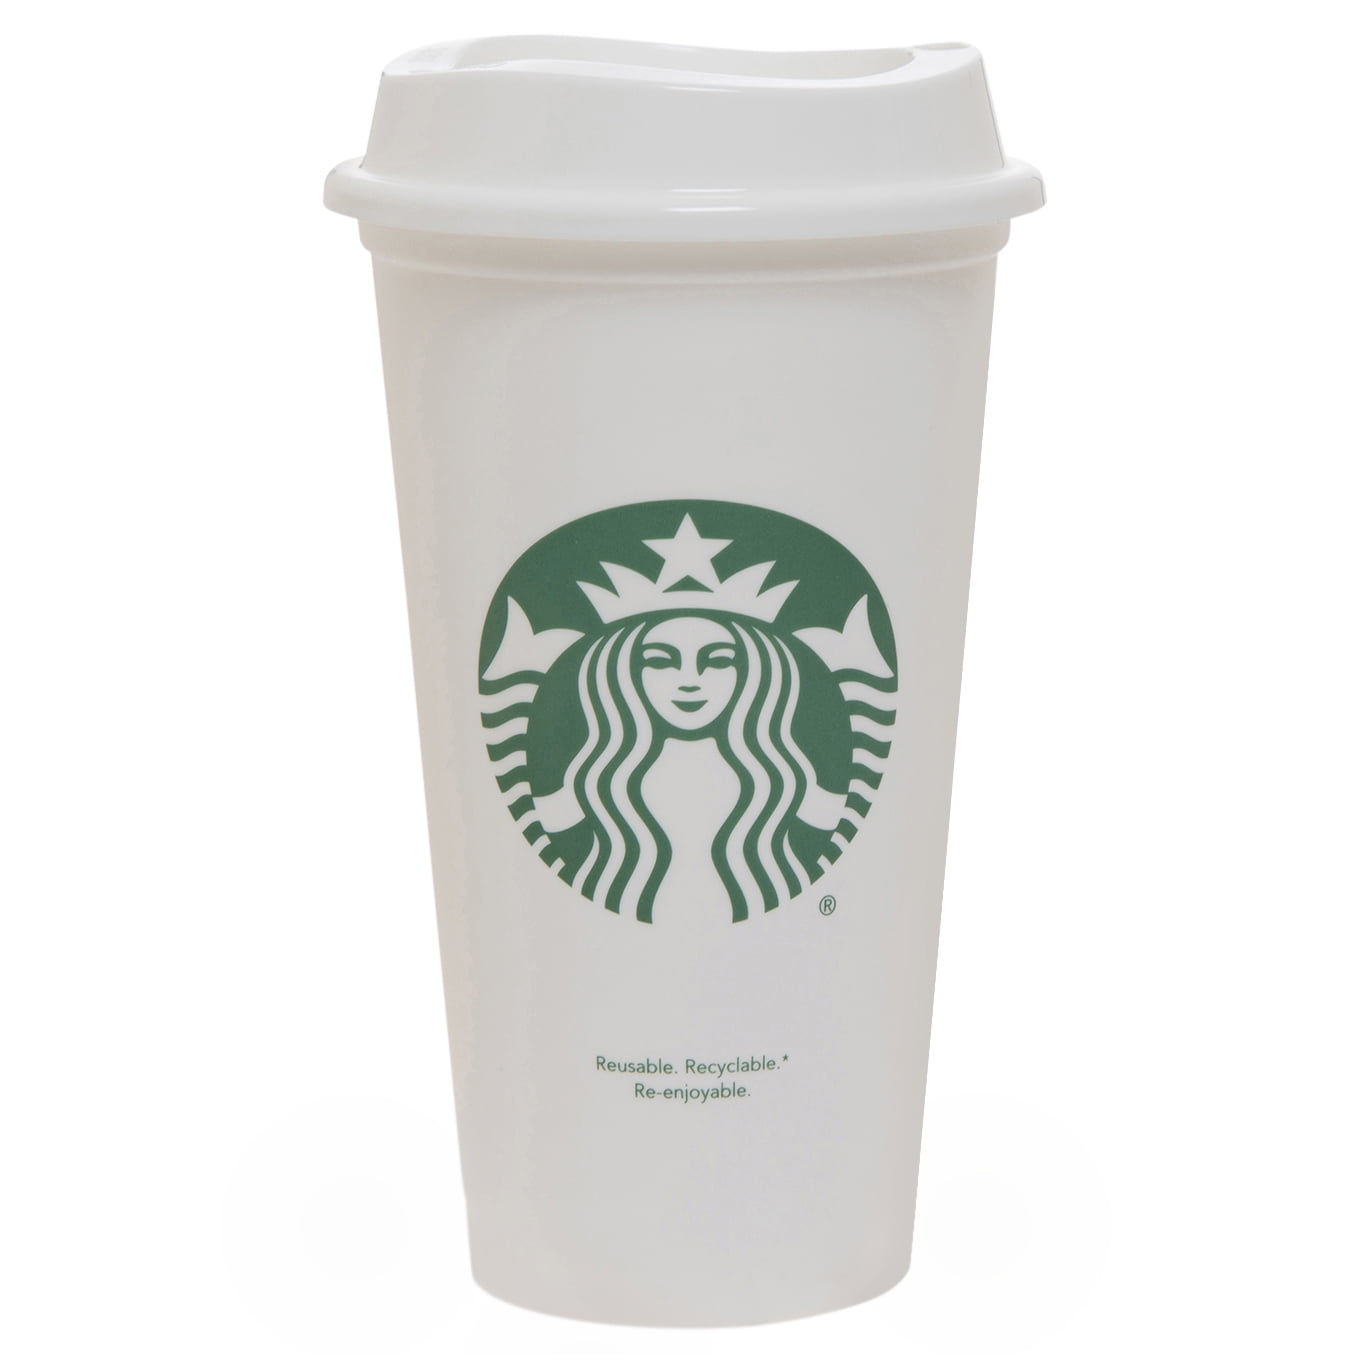 Starbucks 16 Ounce White Reusable Cups, 6 Count - Walmart.com - Walmart.com